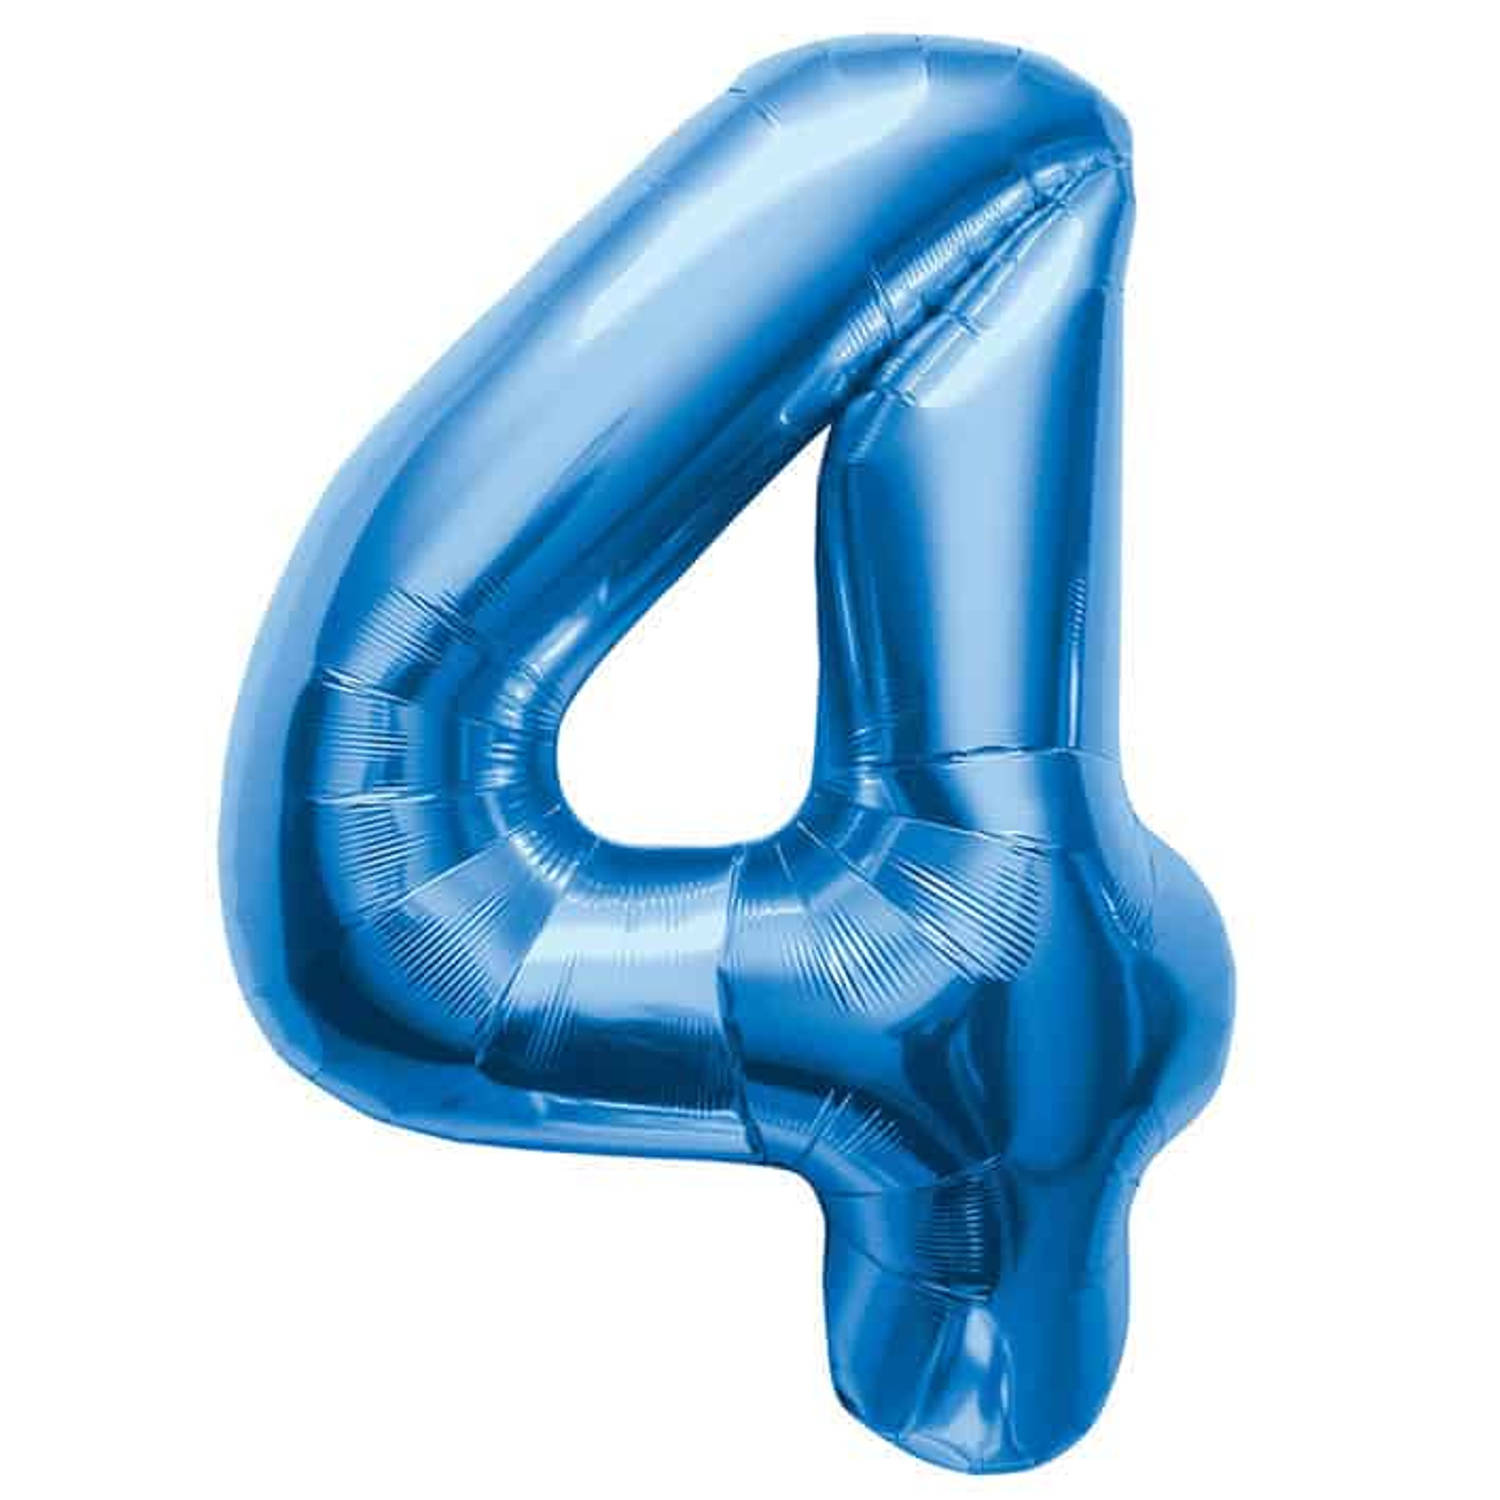 Blauwe Folieballon Cijfer 4 - 86cm